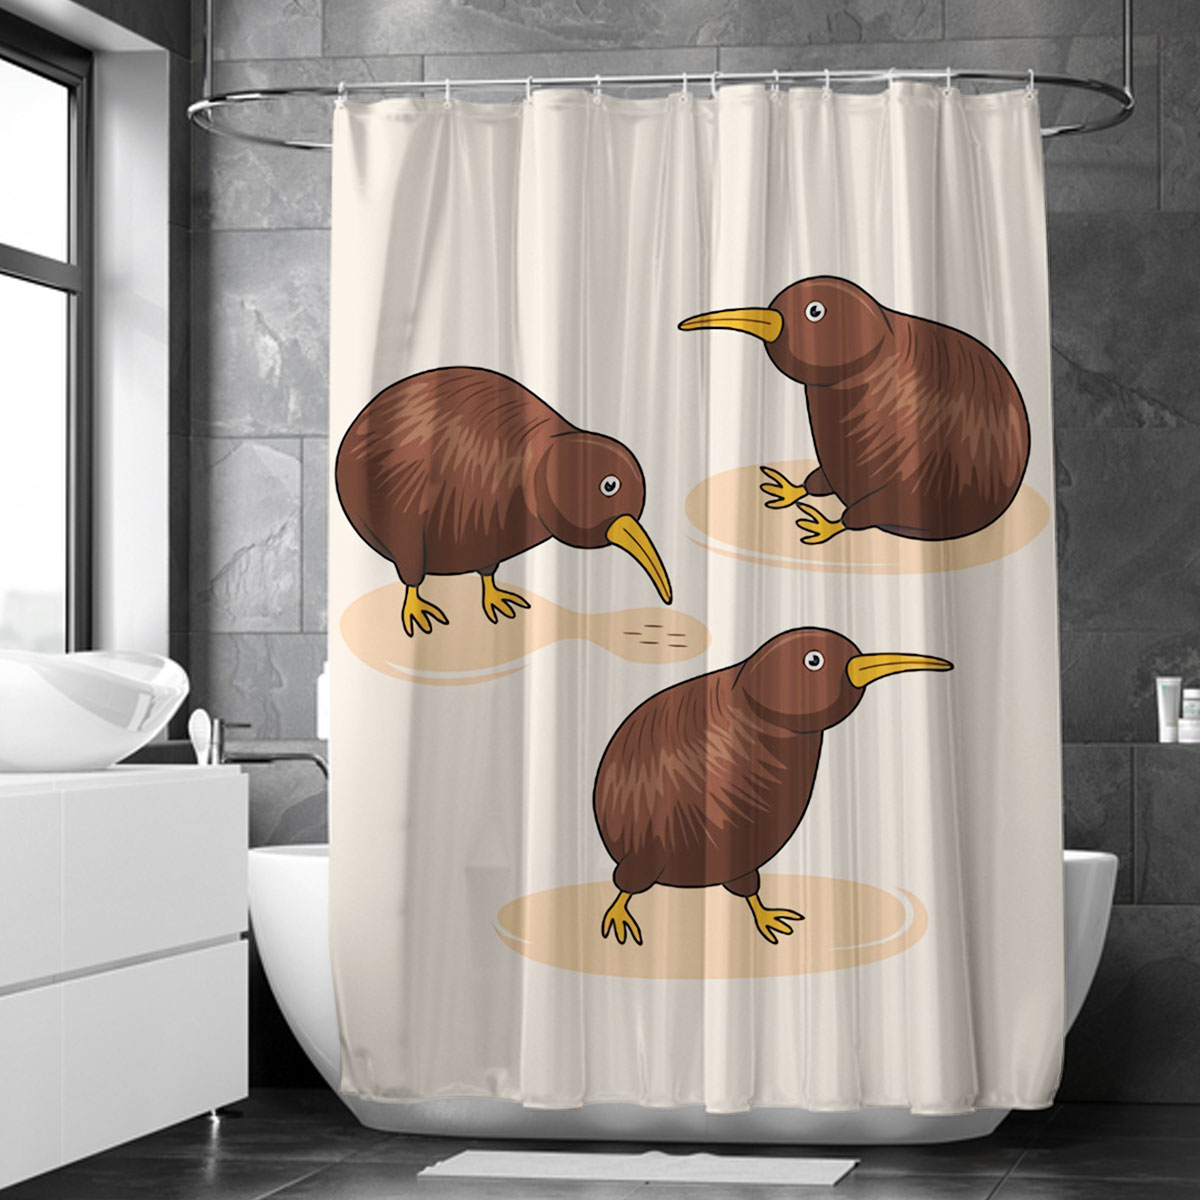 Triple Kiwi Shower Curtain 6